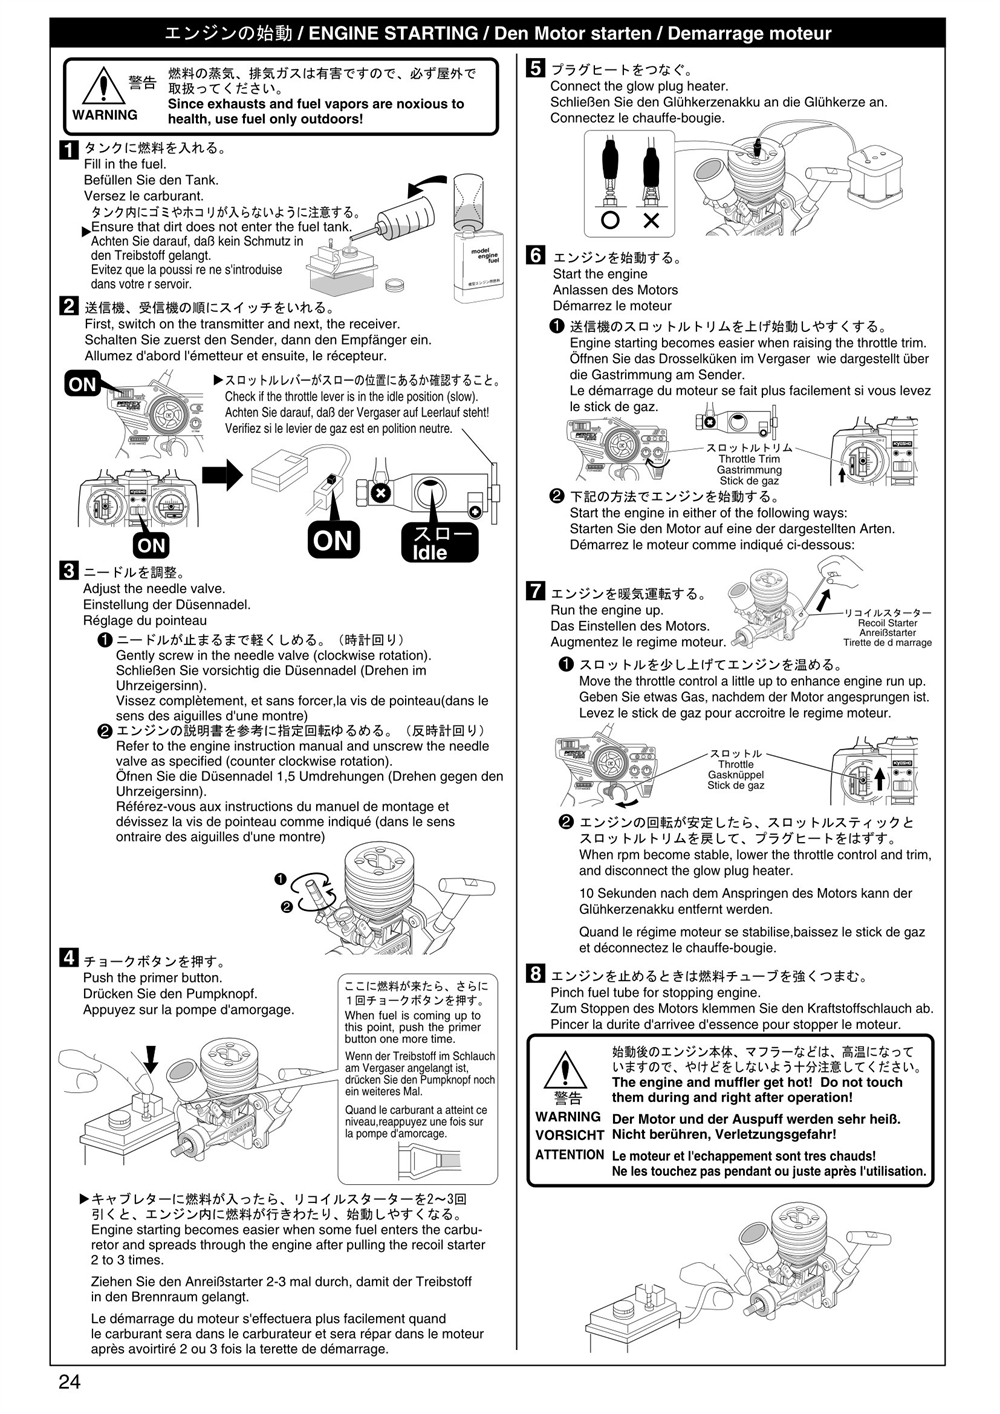 Kyosho - PureTen GP Alpha 3 - Manual - Page 24